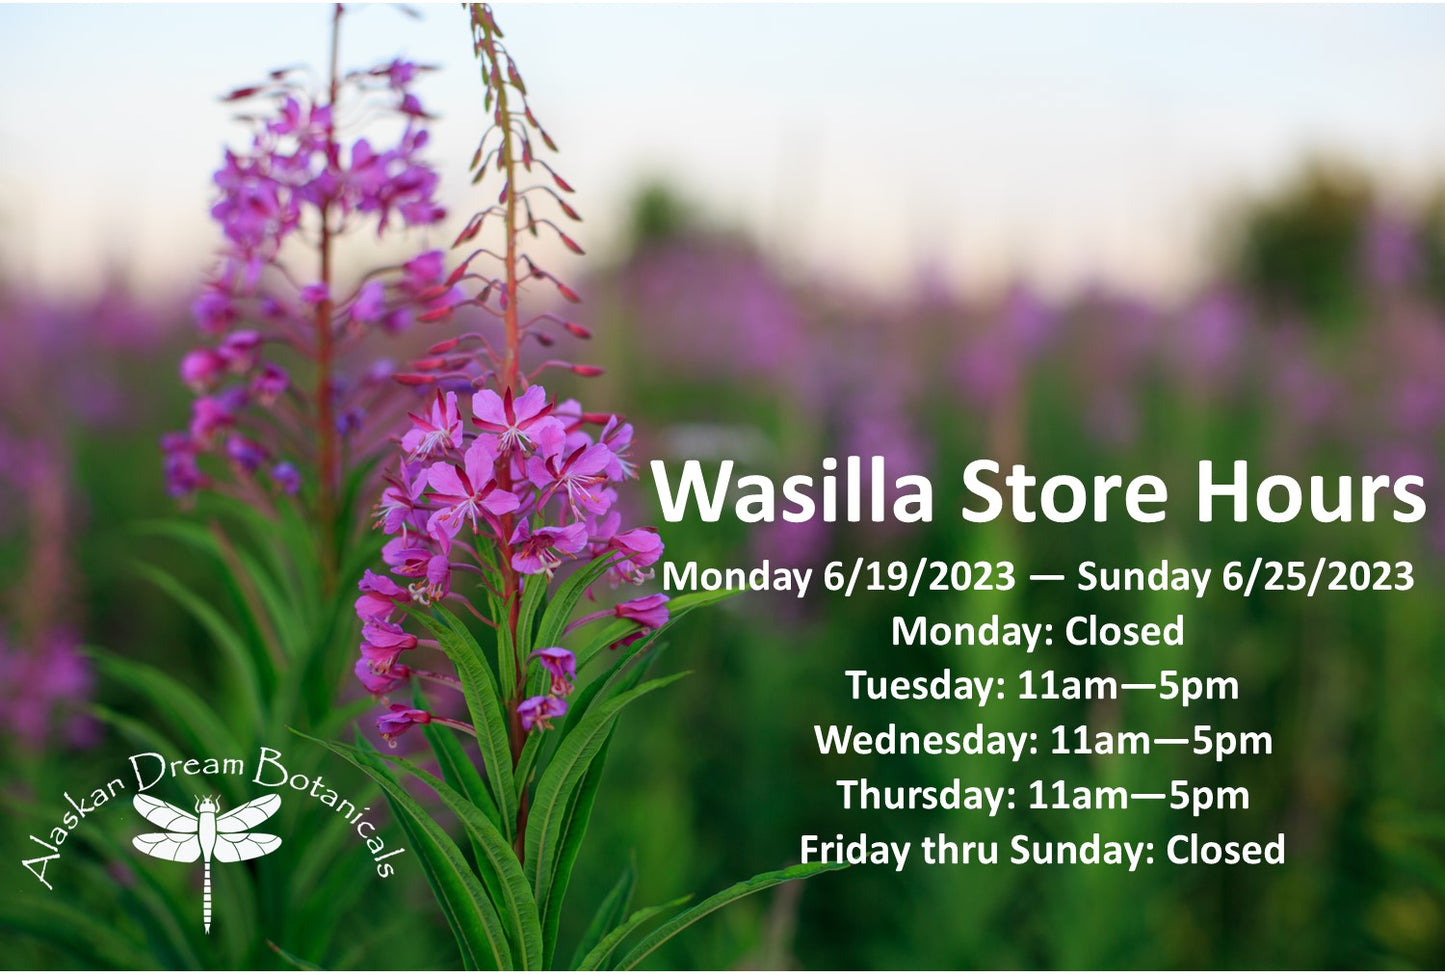 Wasilla Store Hours 6/19/23 - 6/25/23